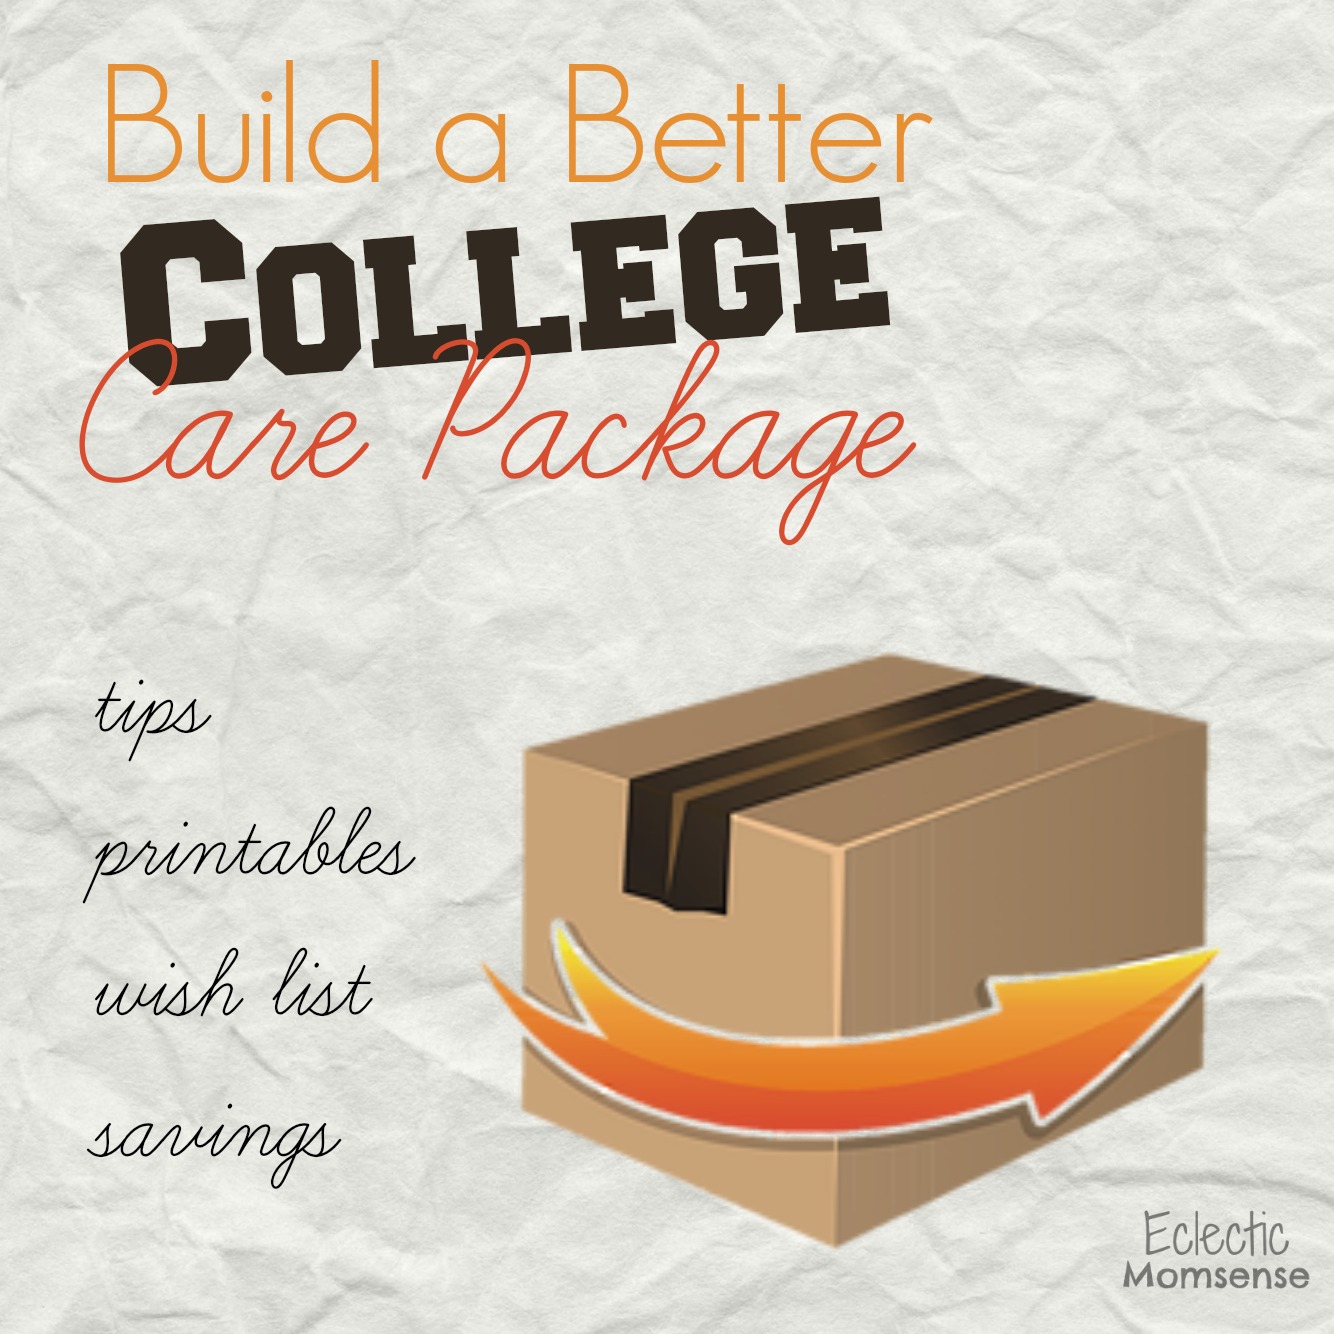 https://eclecticmomsense.com/wp-content/uploads/2014/10/Build_A_Better_Care_Package.jpg